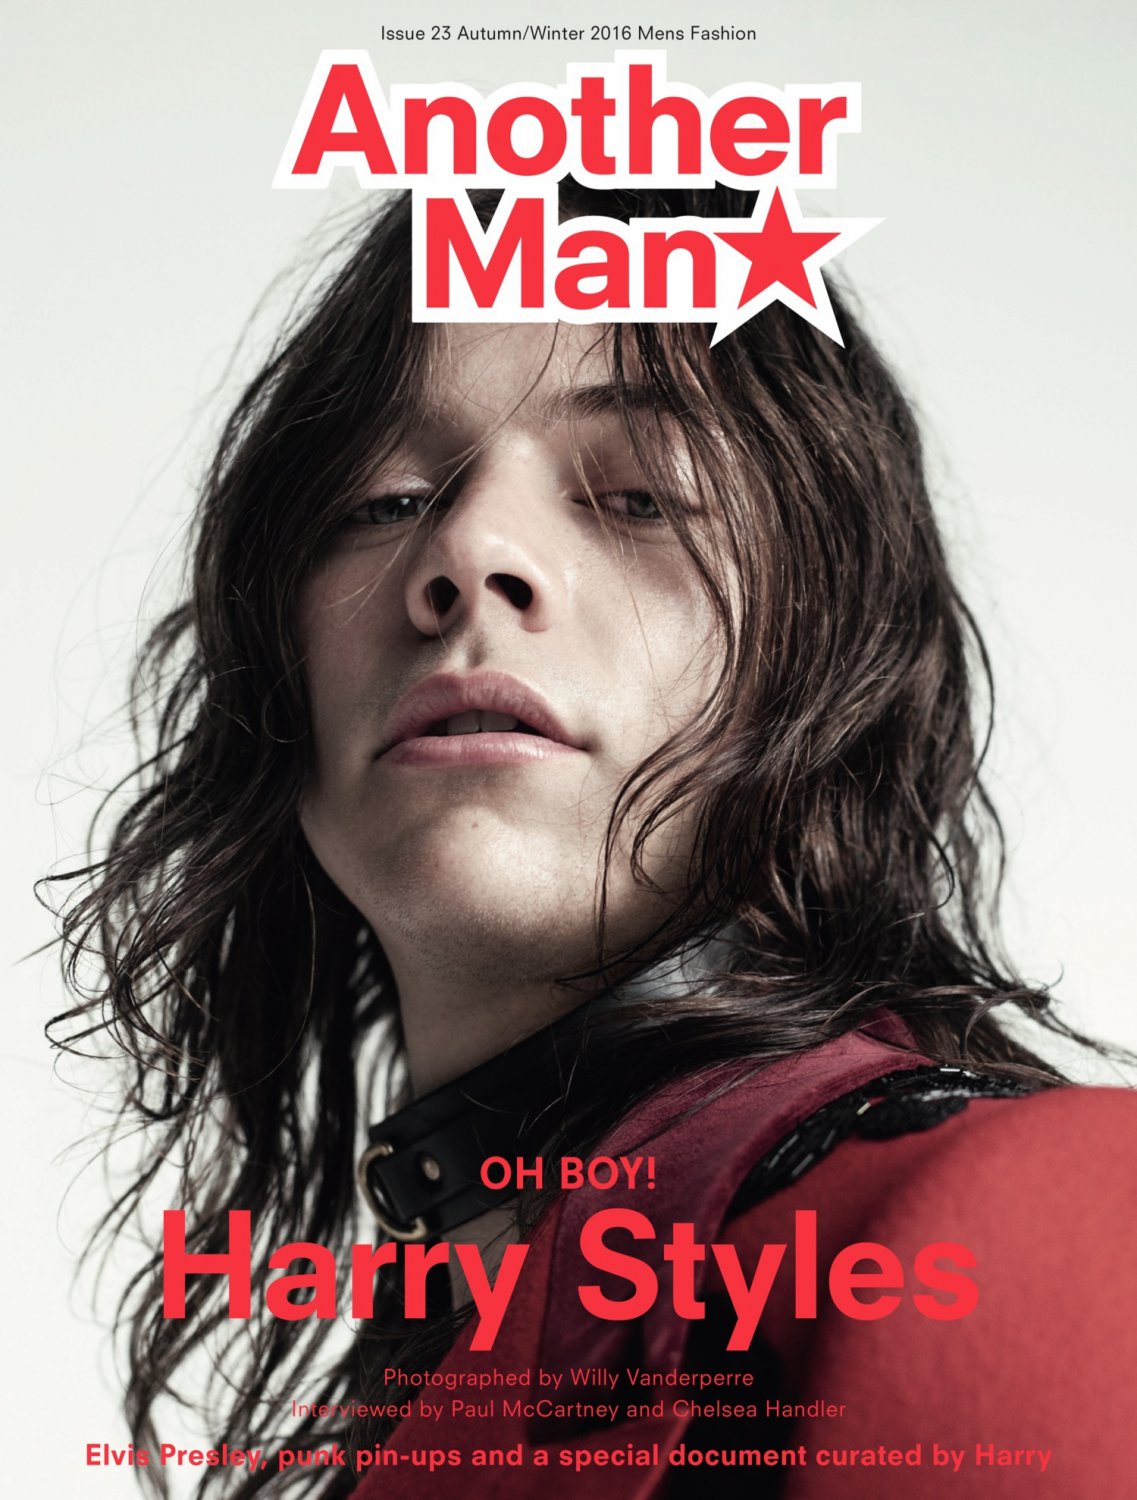 Harry Styles  18"x28" (45cm/70cm) Poster